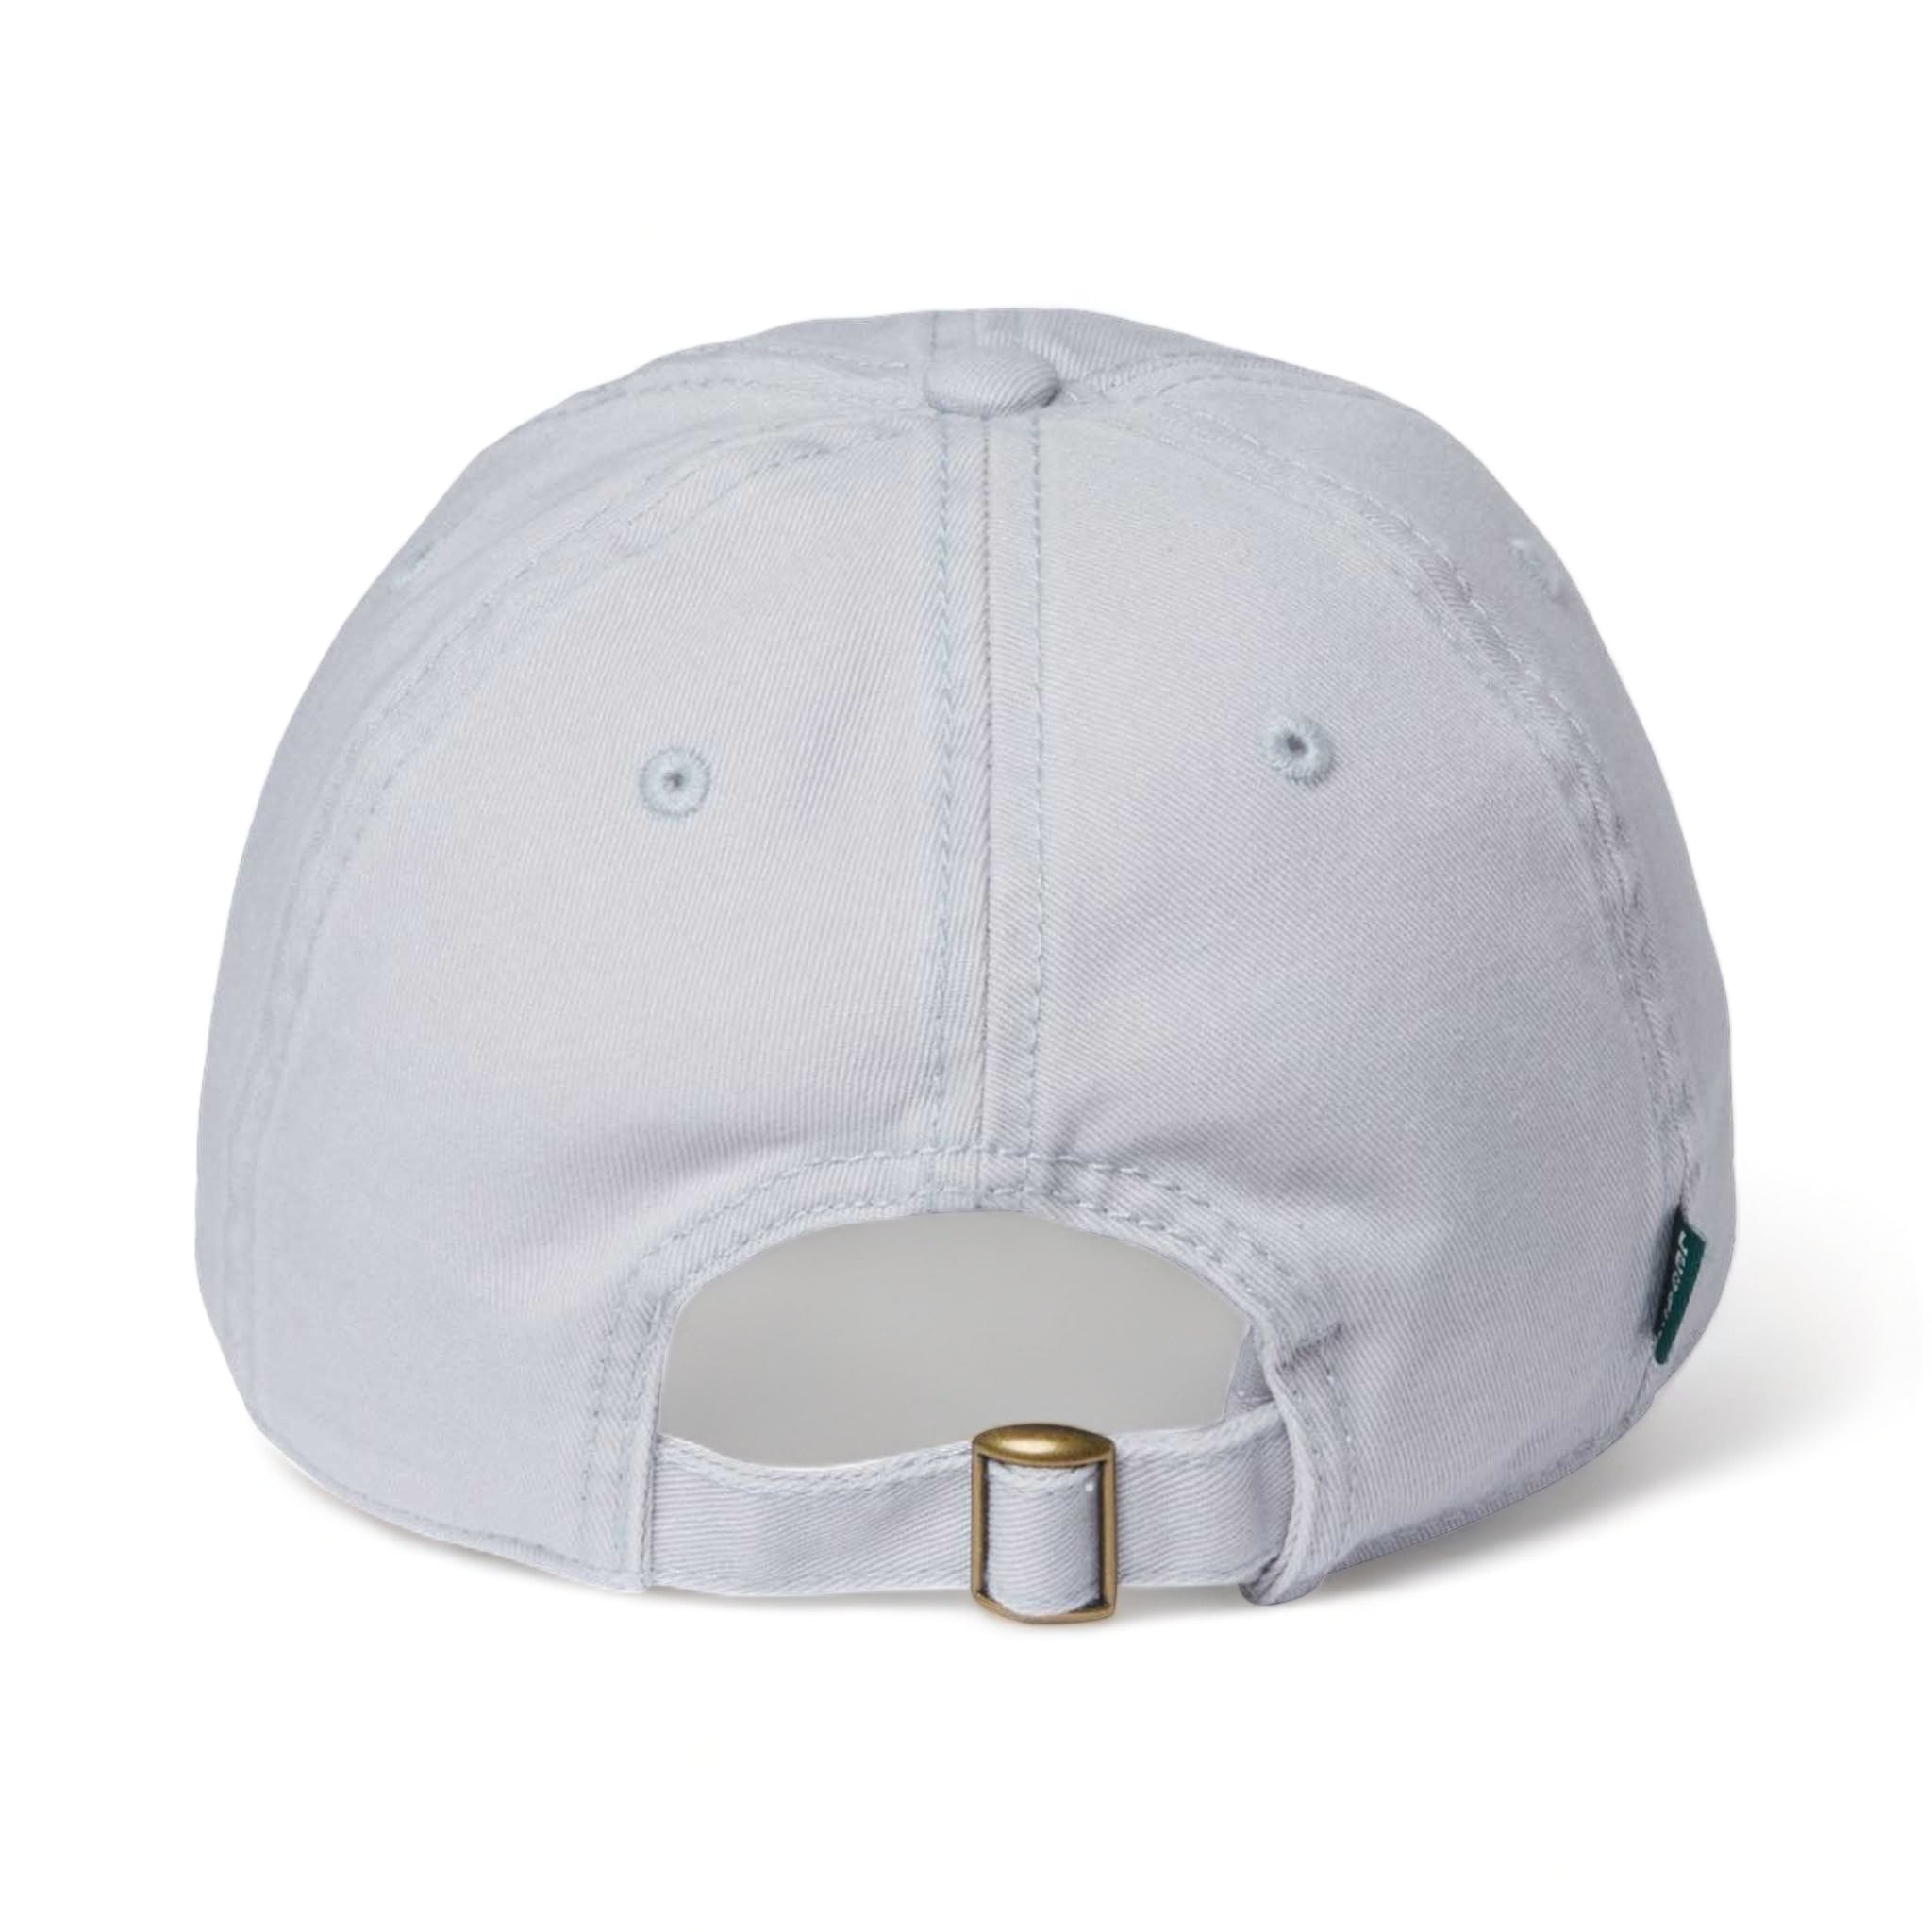 Back view of LEGACY EZA custom hat in silver